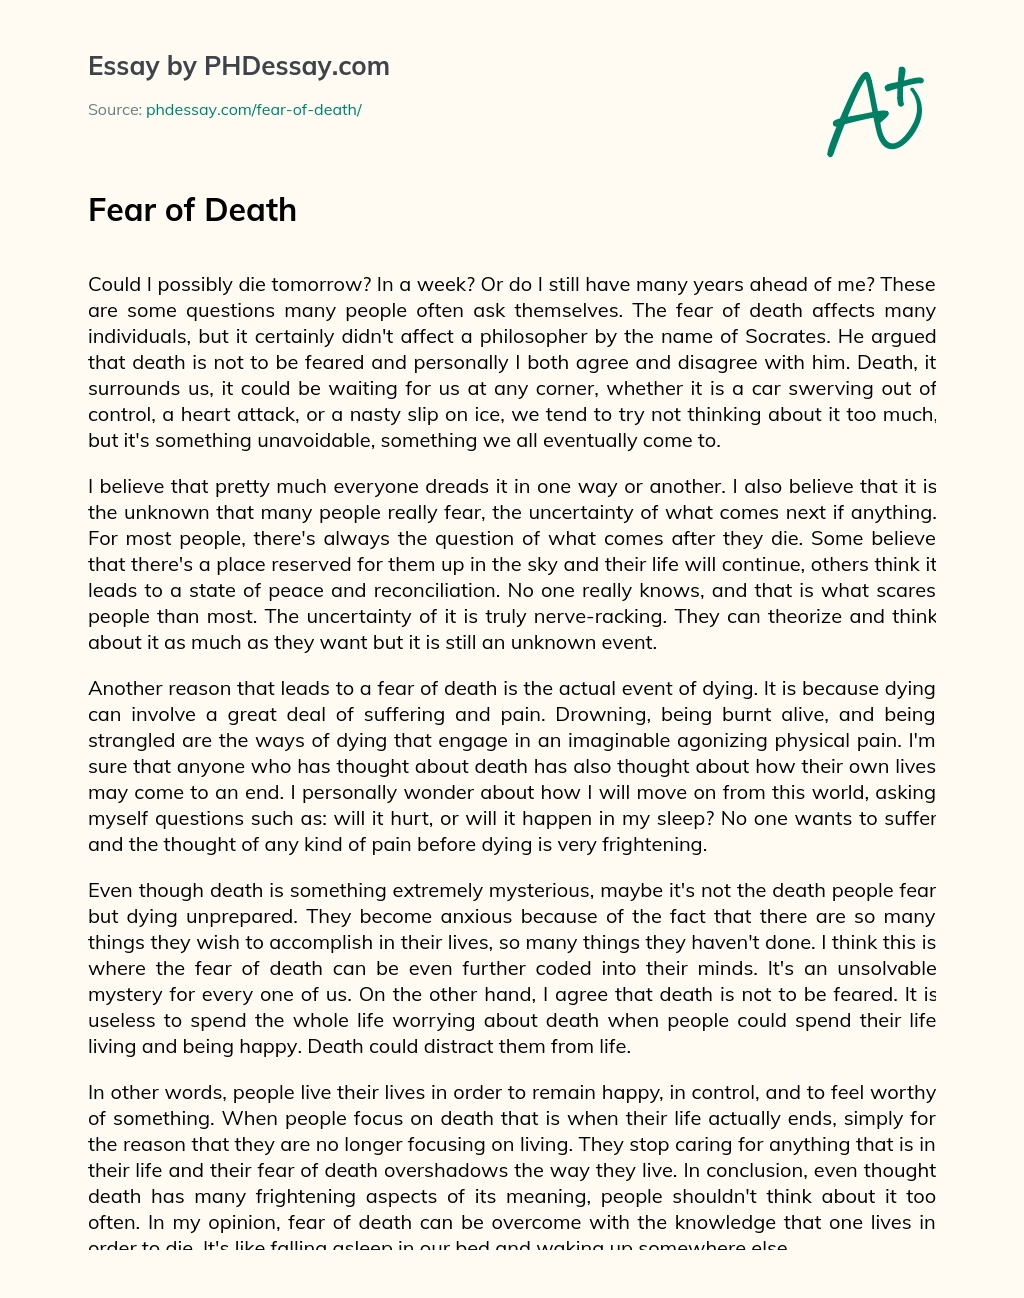 Fear of Death essay